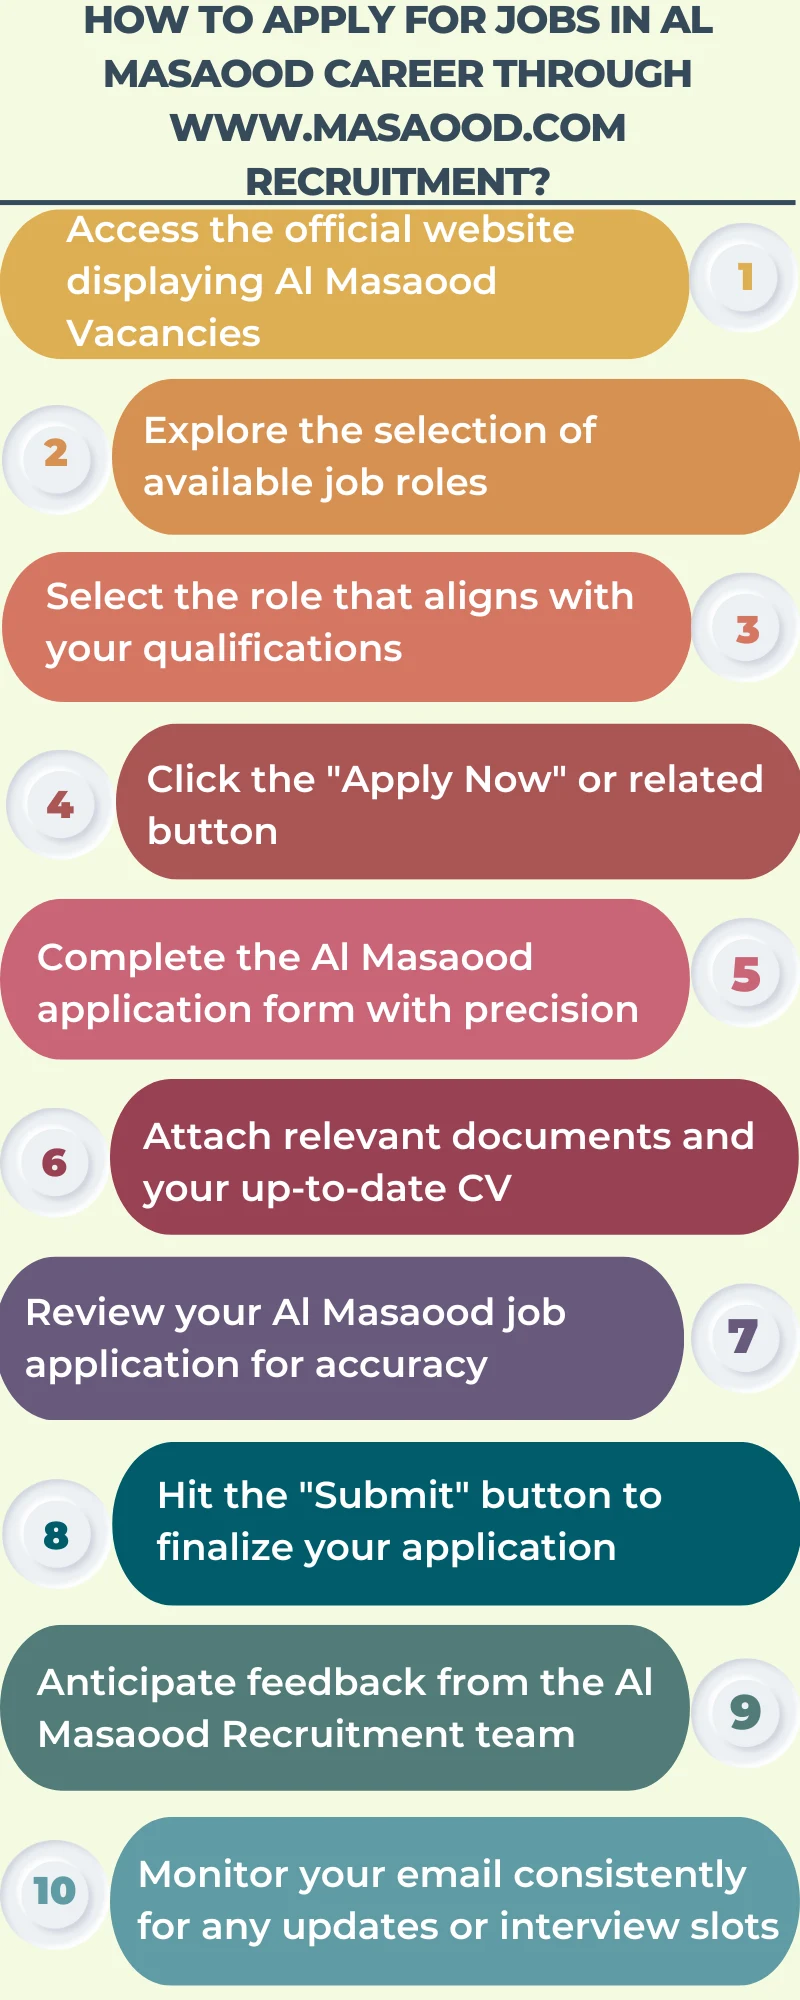 How to Apply for Jobs in Al Masaood Career through www.masaood.com recruitment